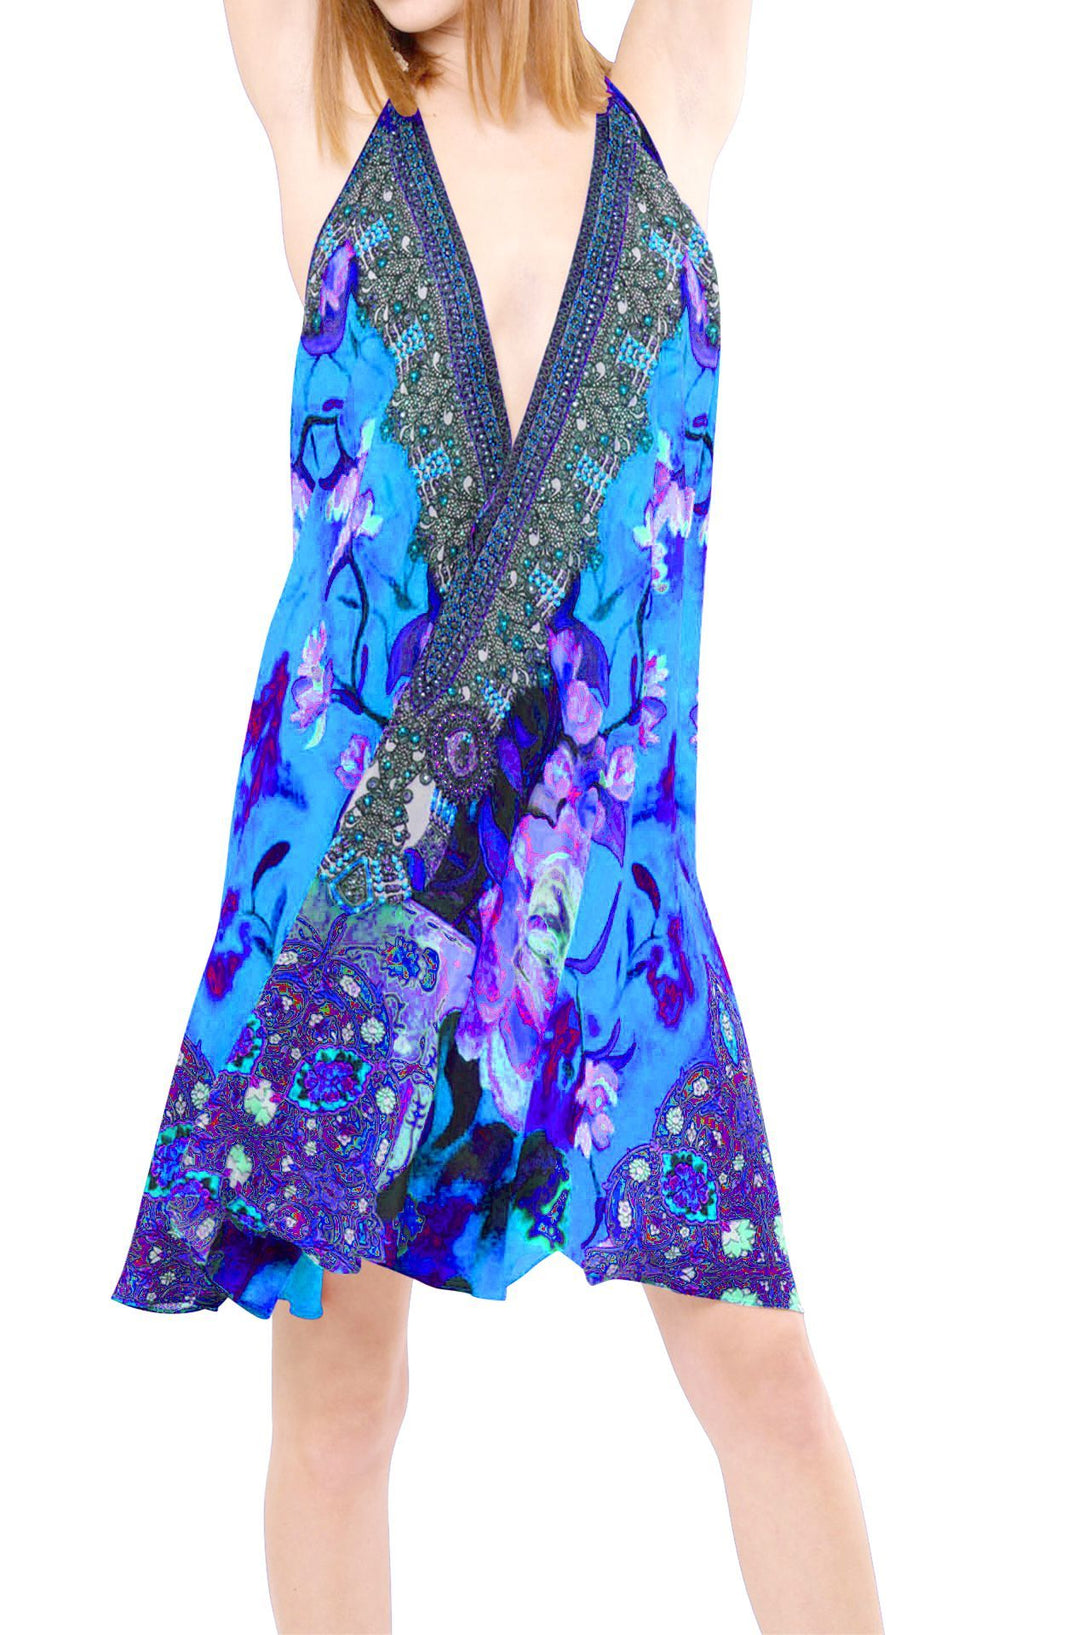  royal blue mini dress, Shahida Parides, sexy short dresses, short sleeveless dress,